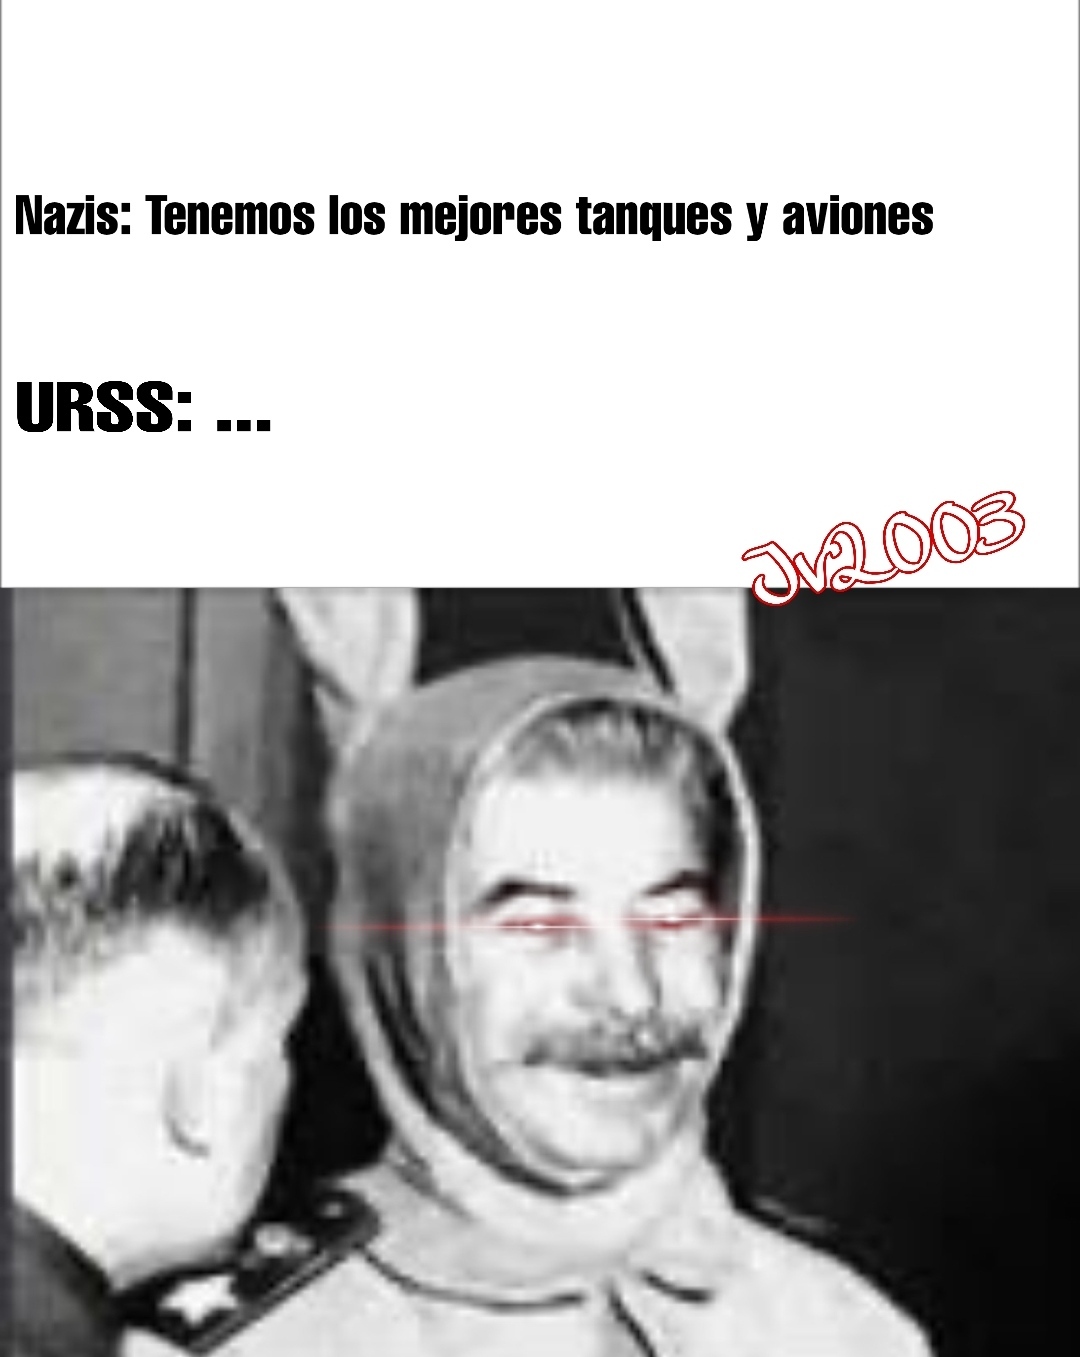 Stalin con orejas de conejo xdd - meme